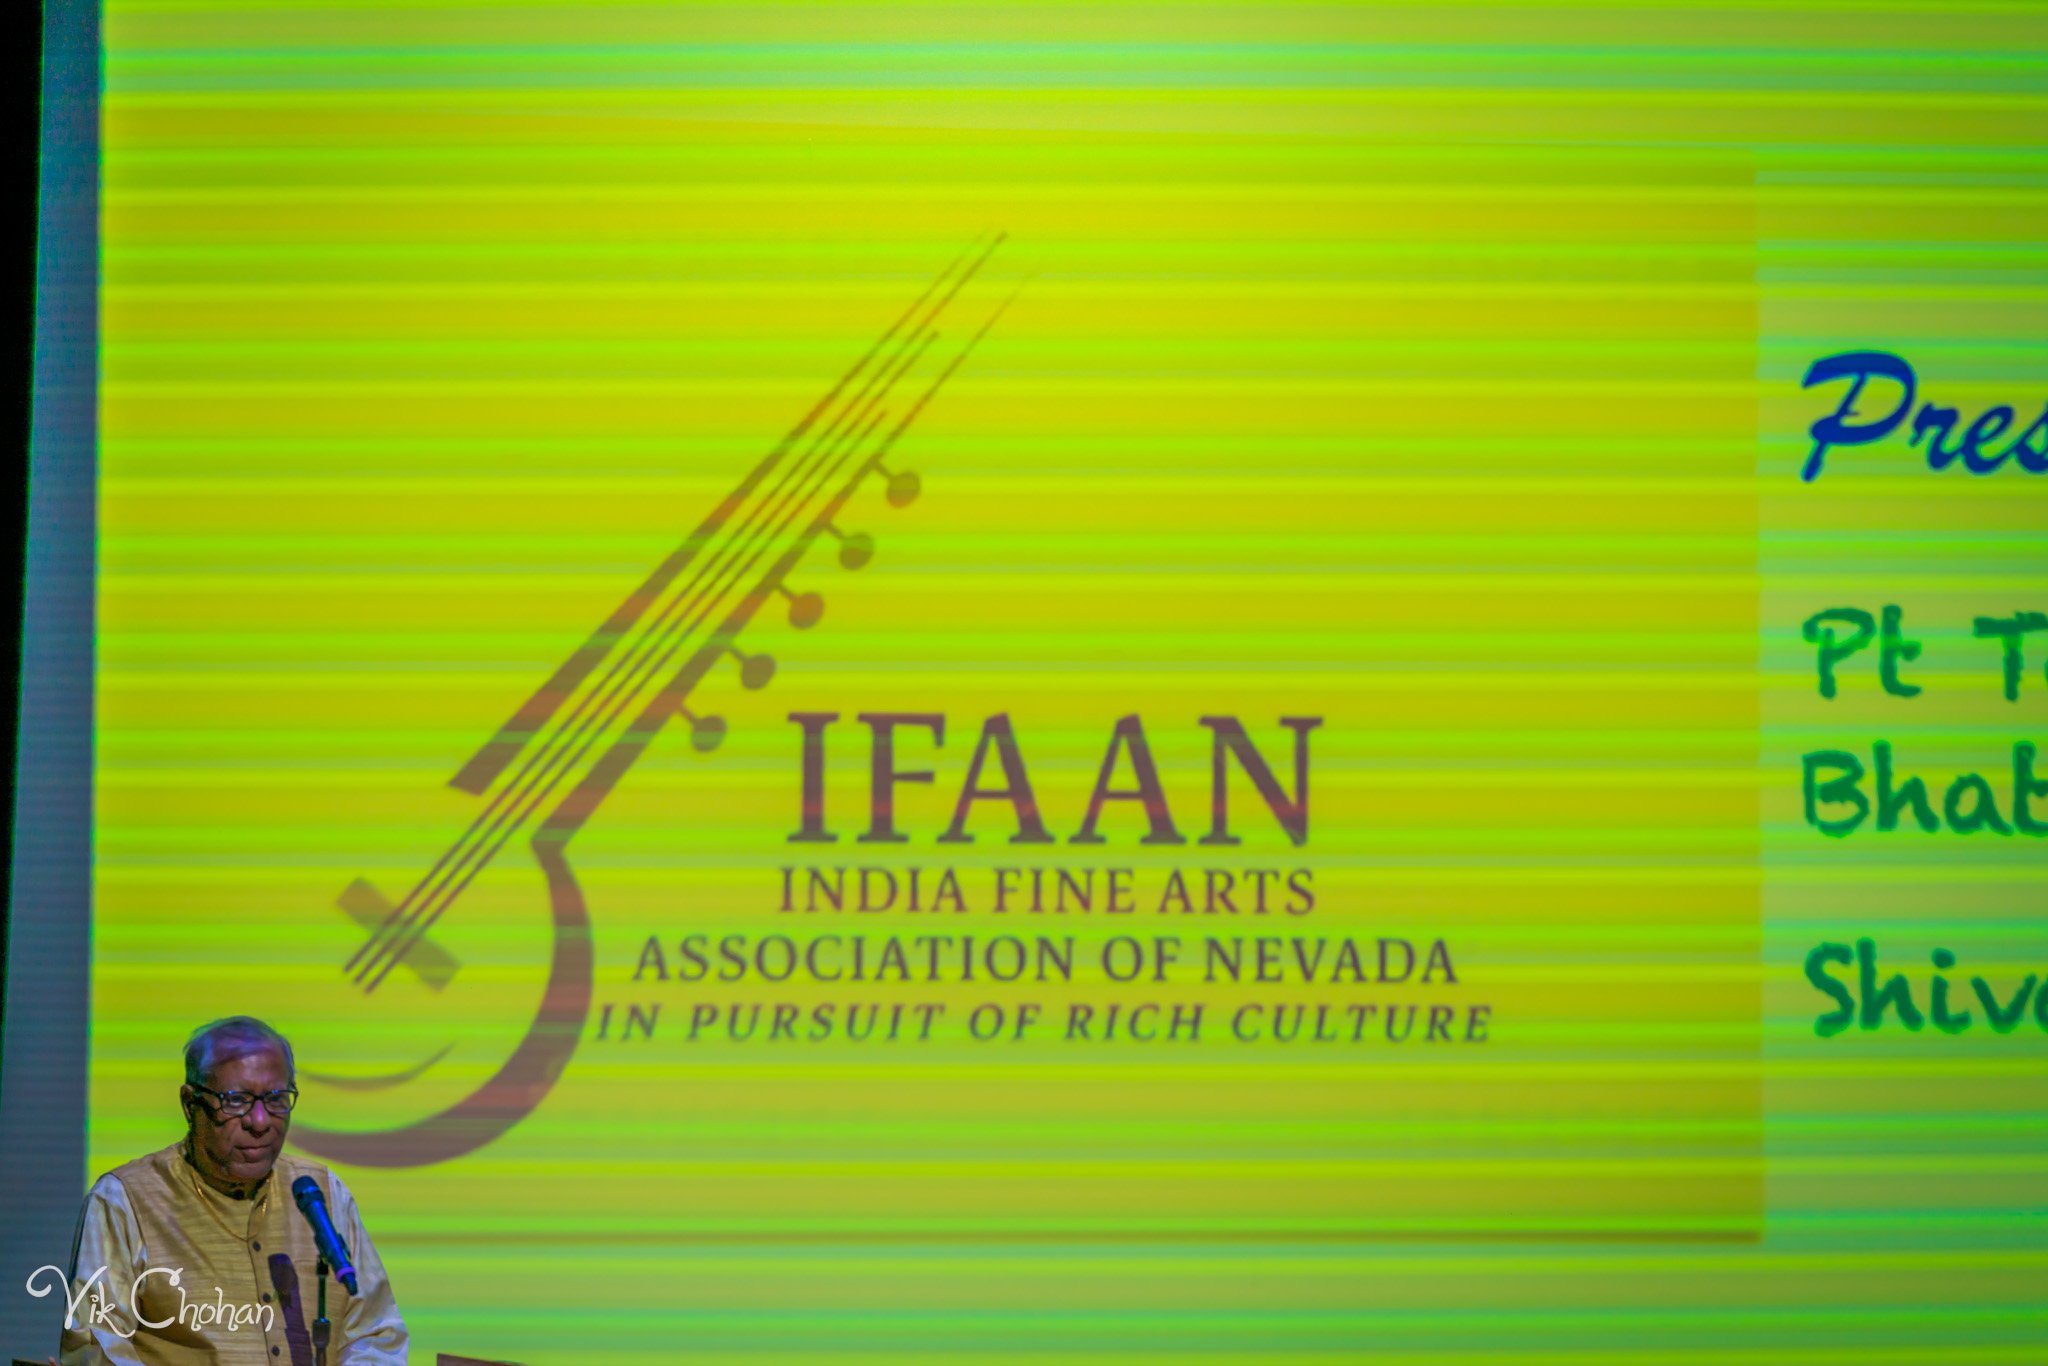 2023-03-12-IFAAN-India-Fine-Arts-Association-Of-Nevada-Presents-PT-Tarun-Bhattacharya-Shivam-Sudame-Vik-Chohan-Photography-Photo-Booth-Social-Media-VCP-002.jpg